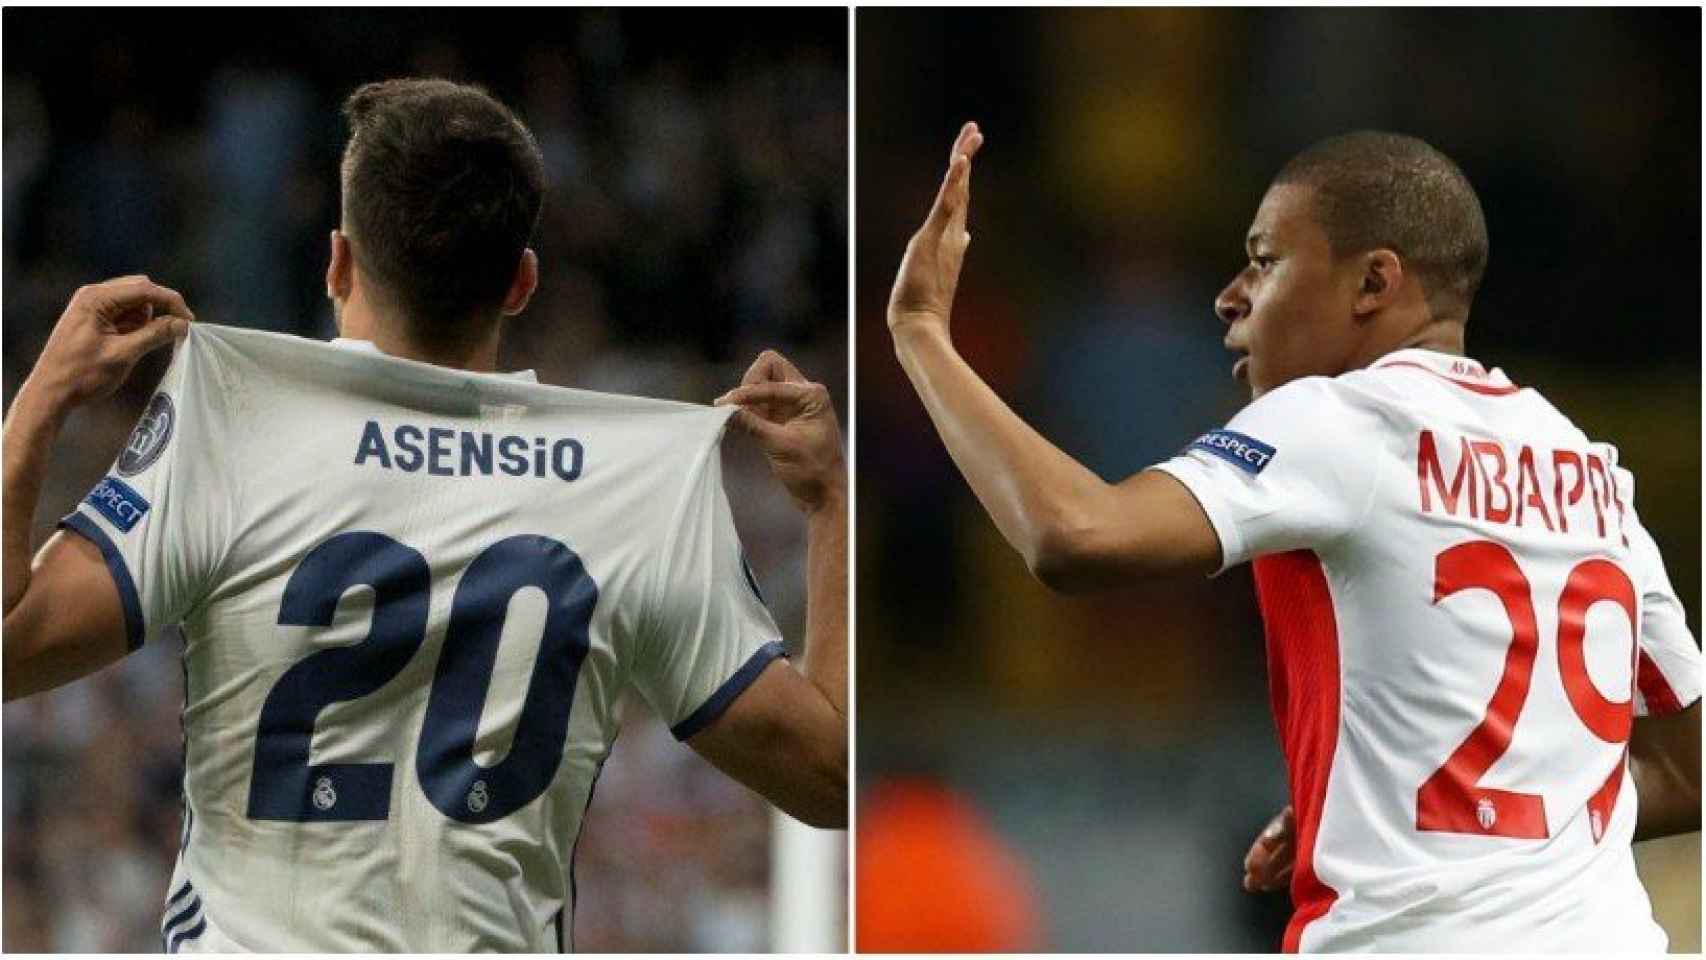 Asensio y Mbappé, la fórmula post Cristiano